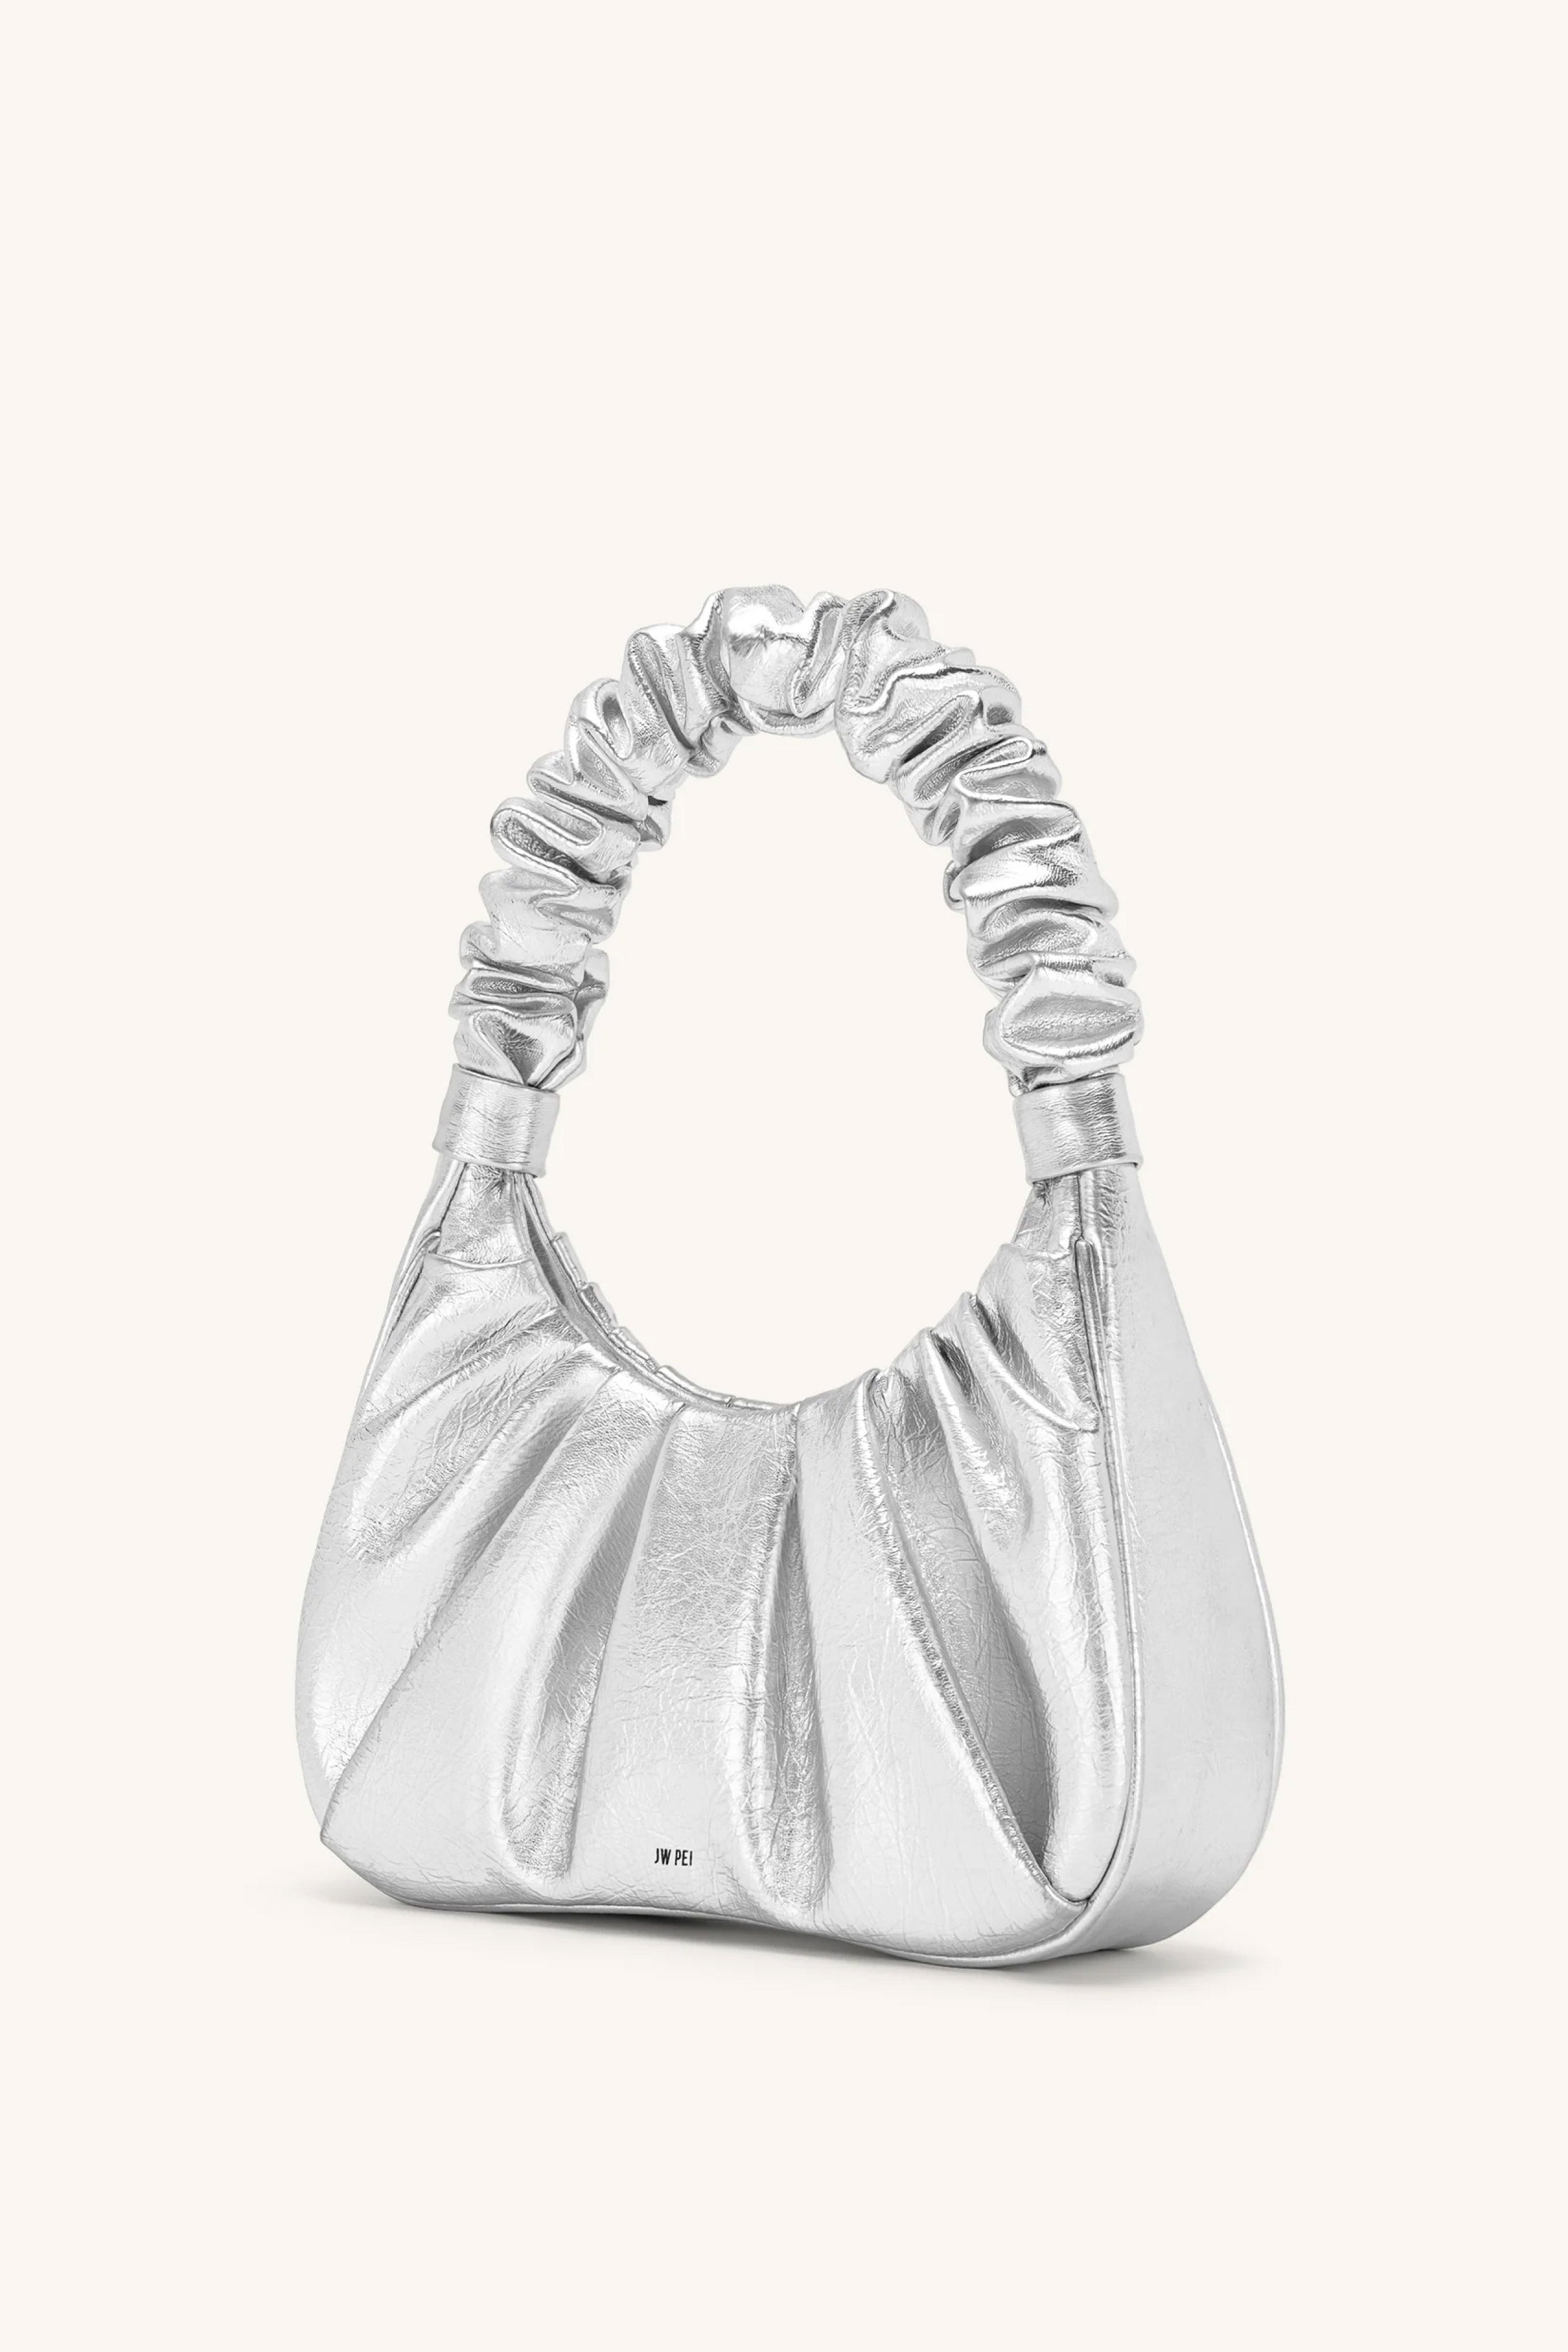 JW PEI  Gabbi Metallic Ruched Hobo Handbag Silver